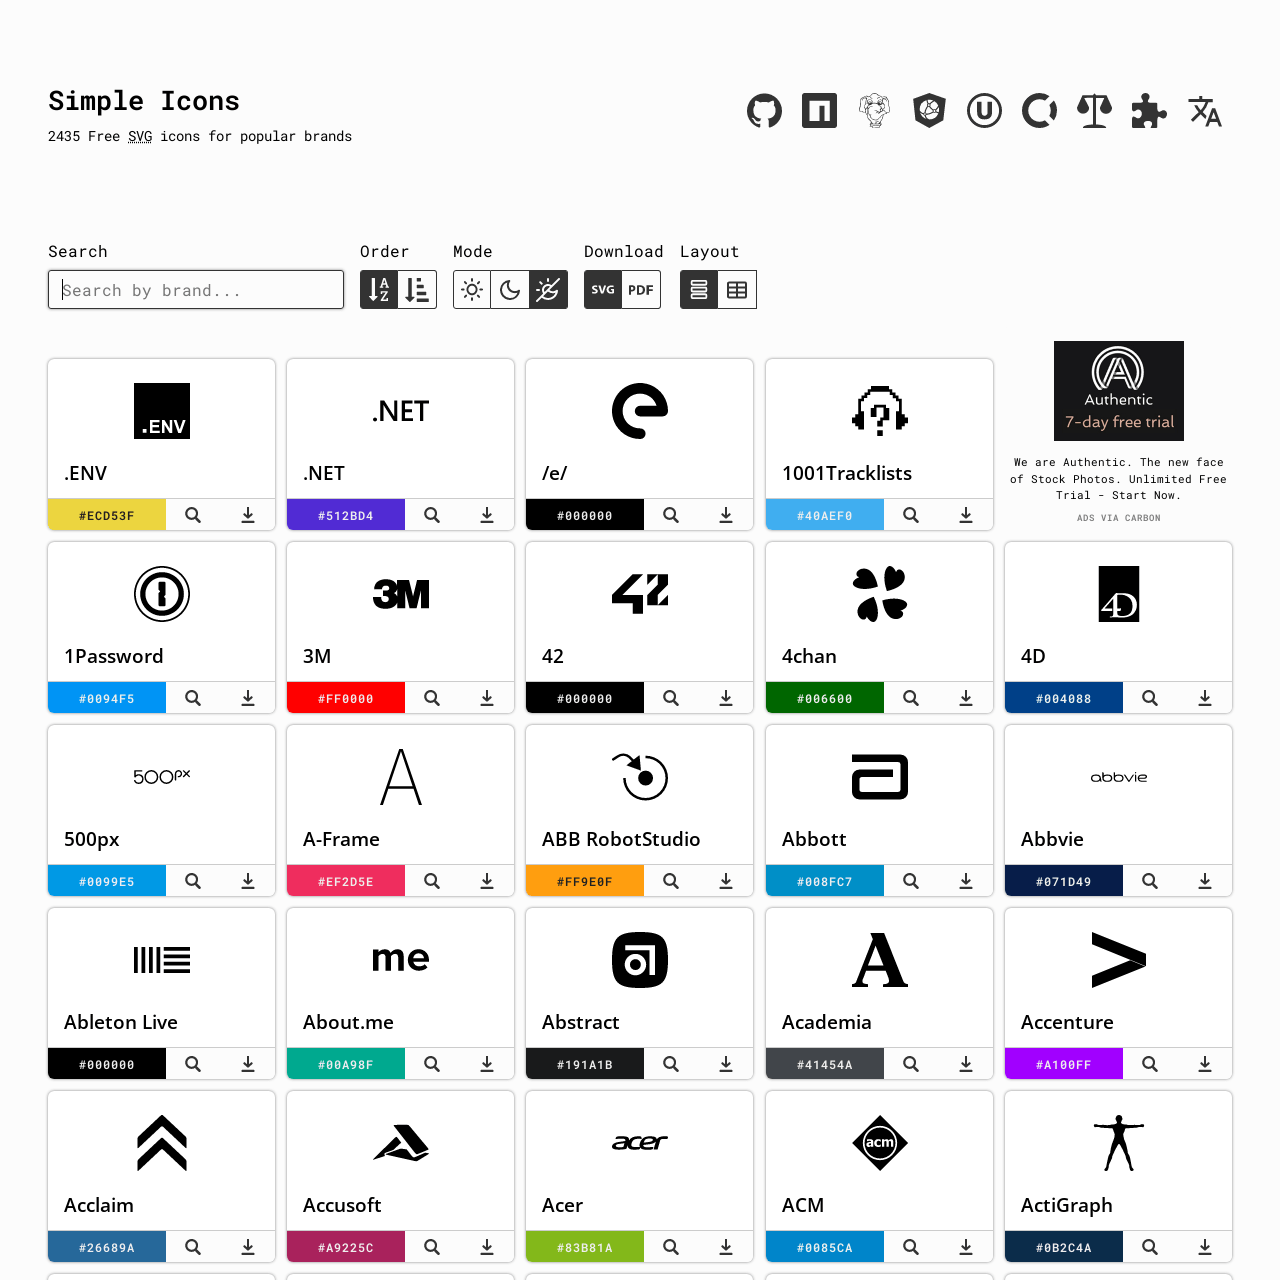 Screenshot of Simple Icons website